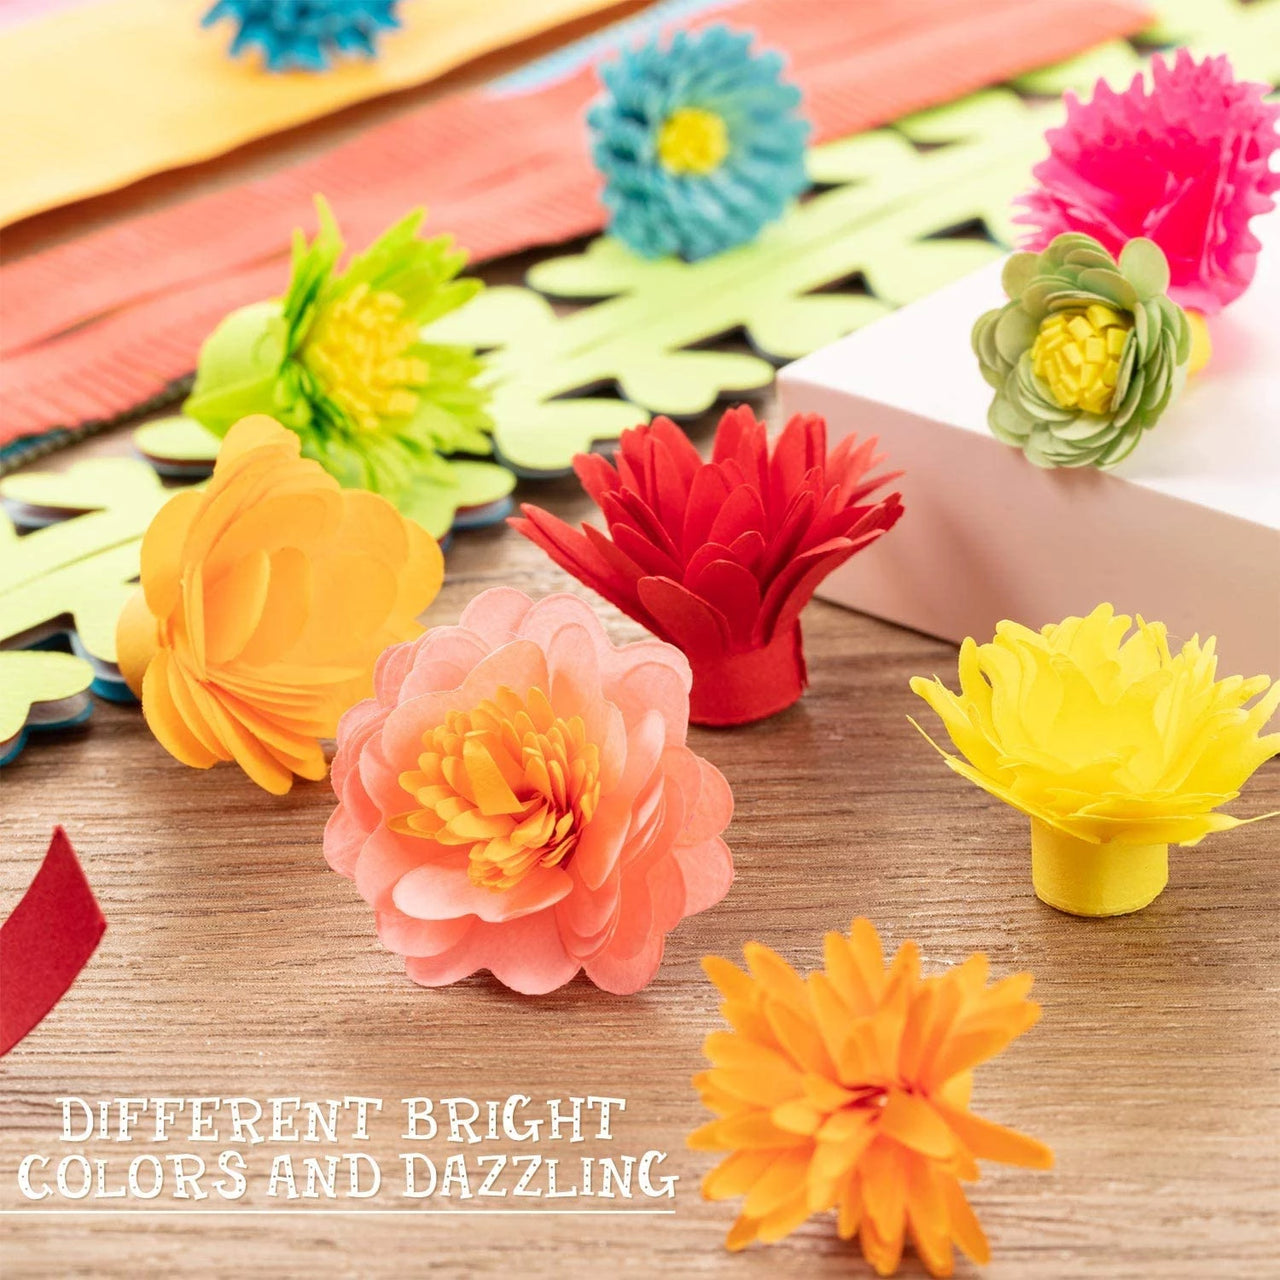 Hunter Creek Crafts 7000 - Die Cut Flower Petals Quilling Paper Strips